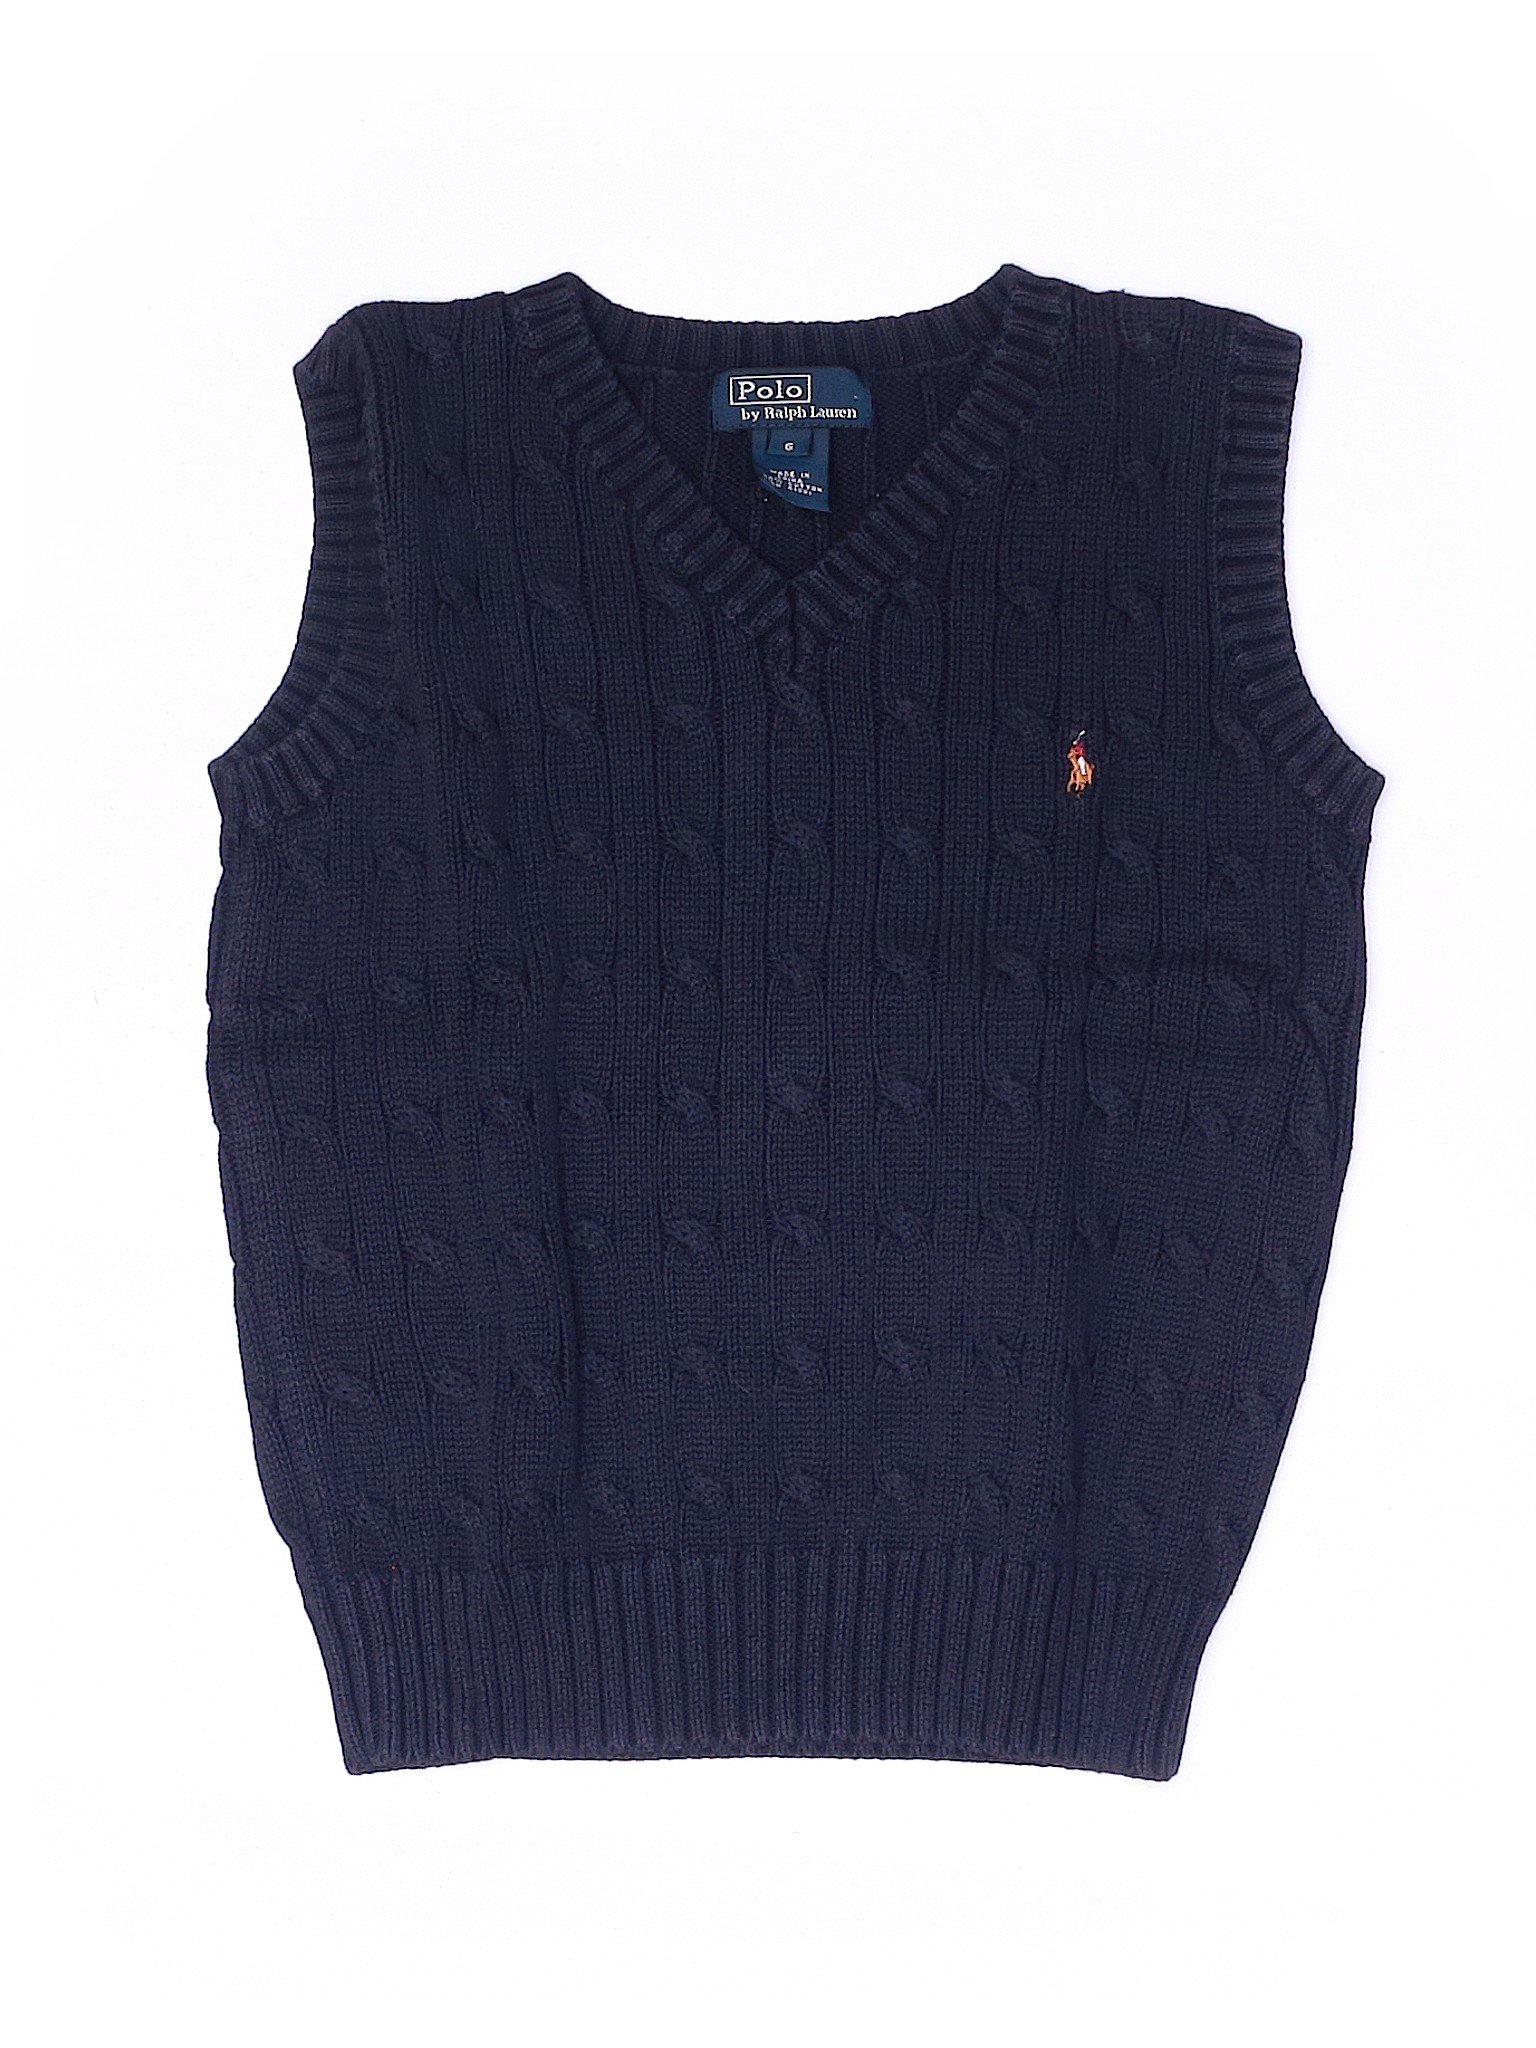 Polo by Ralph Lauren 100% Cotton Blue Sweater Vest Size 6 - 80% off ...